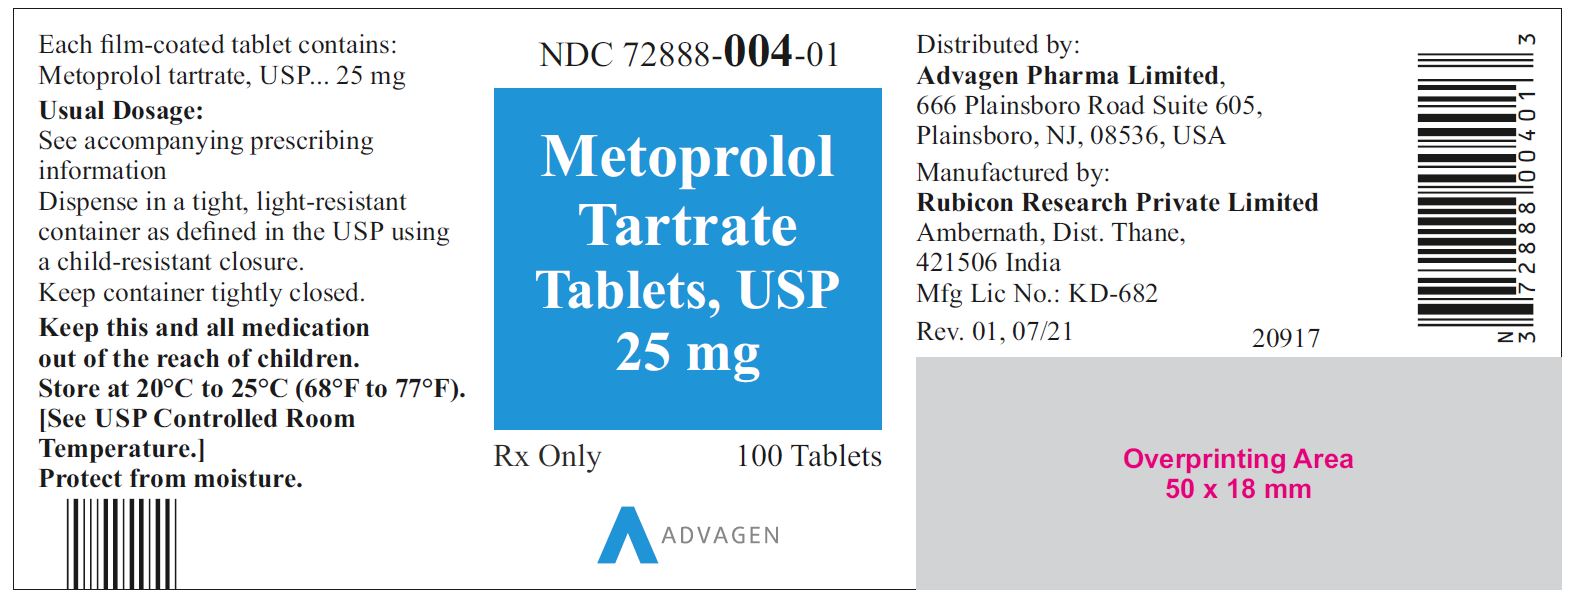 NDC 72888-004-01 - Metoprolol Tartrate Tablets, USP 25 mg - 100 Tablets